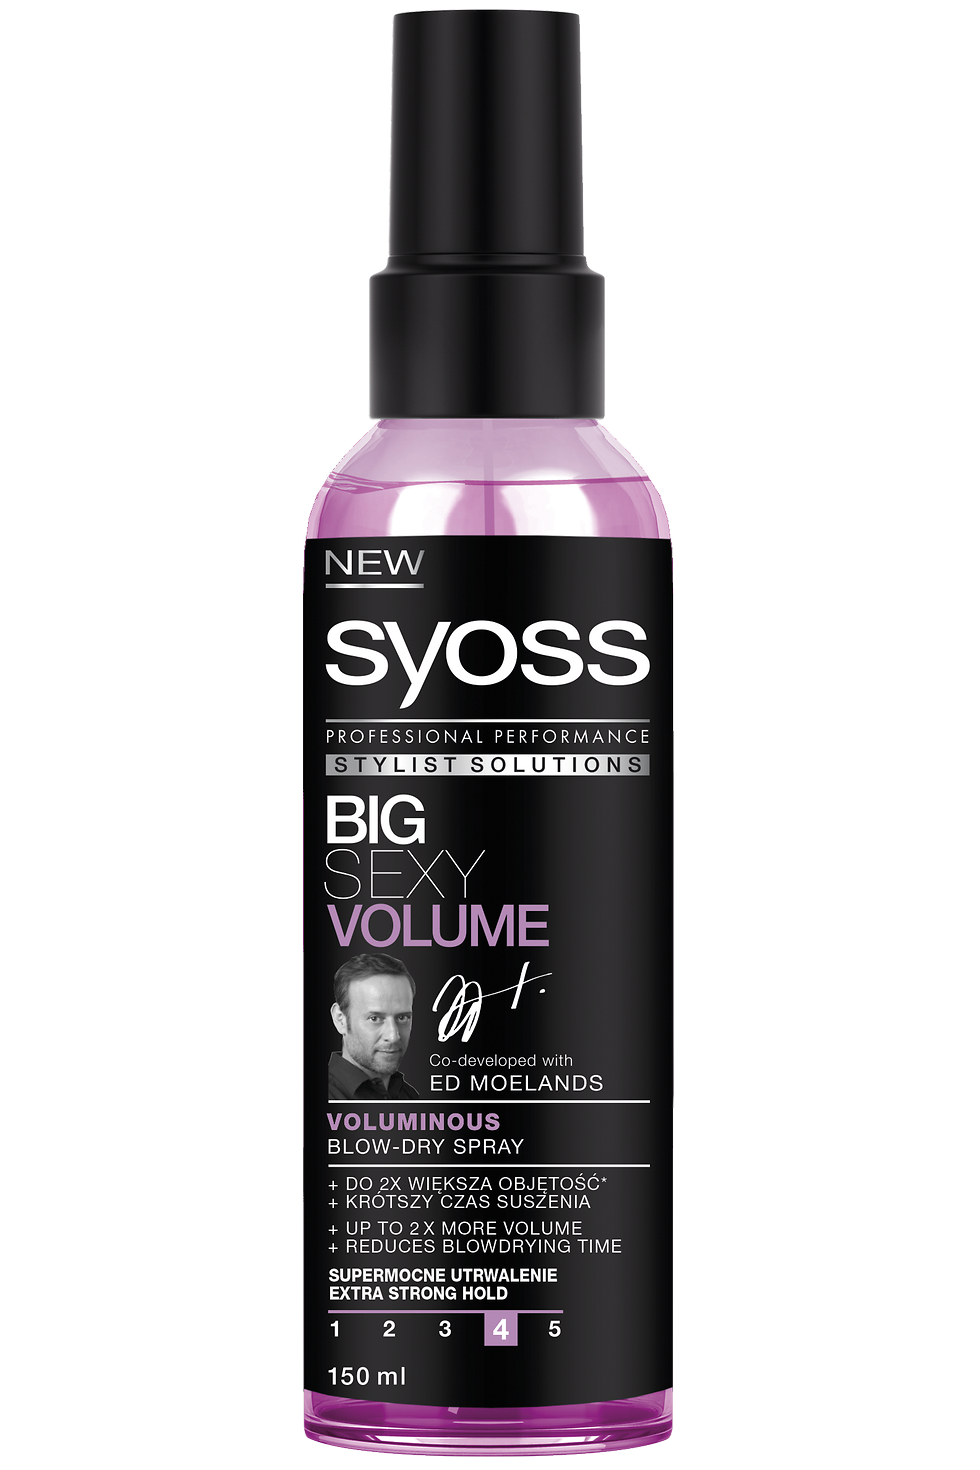 SYOSS BIG SEXY VOLUME Blow-Dry Spray